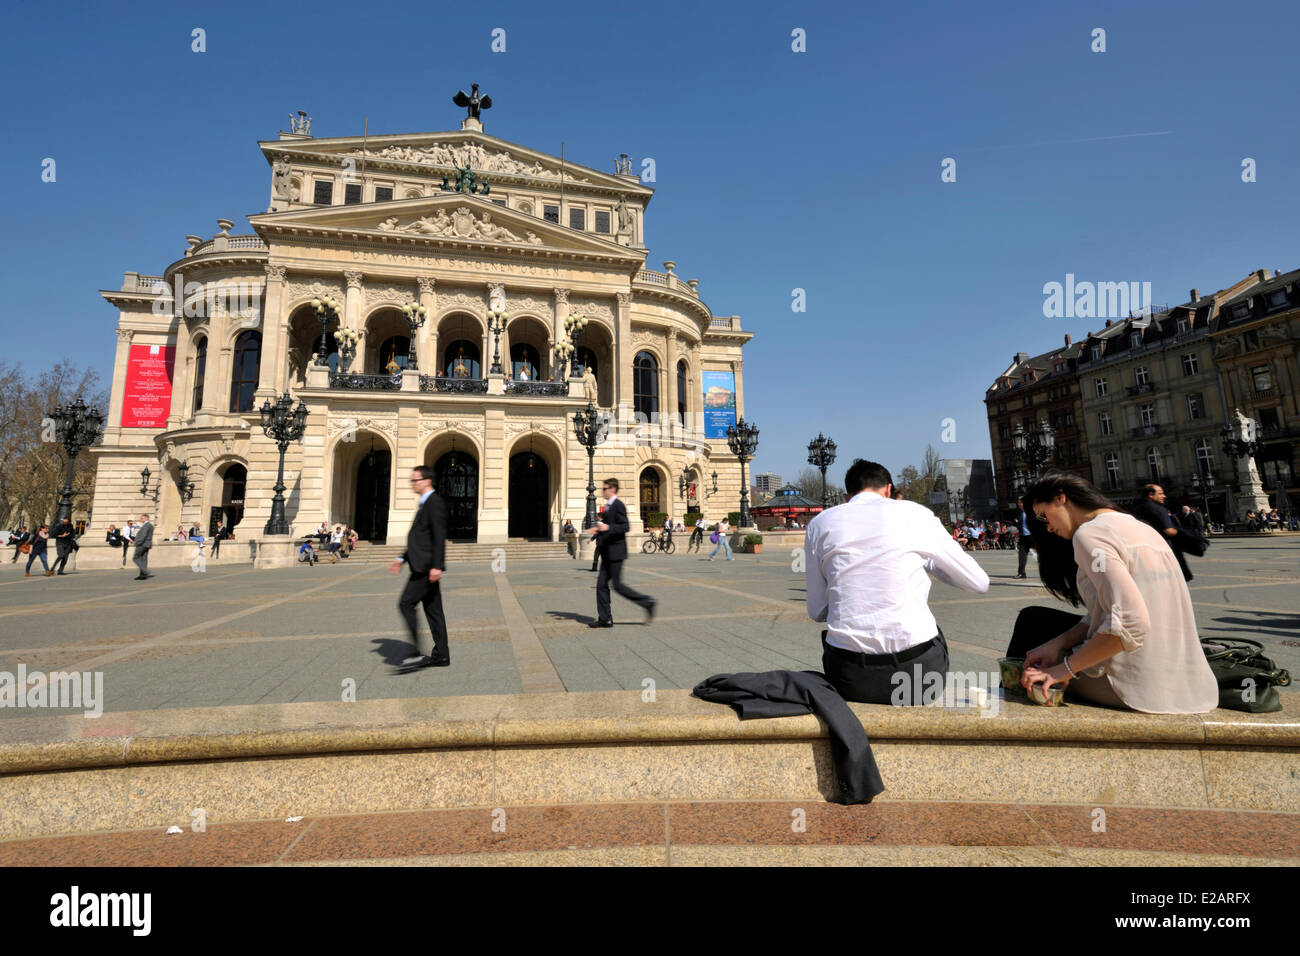 Alemania, Hesse, Fráncfort del Meno, el distrito financiero, Opern Platz (la plaza de la ópera) con Alte Oper (Antigua Ópera) Foto de stock